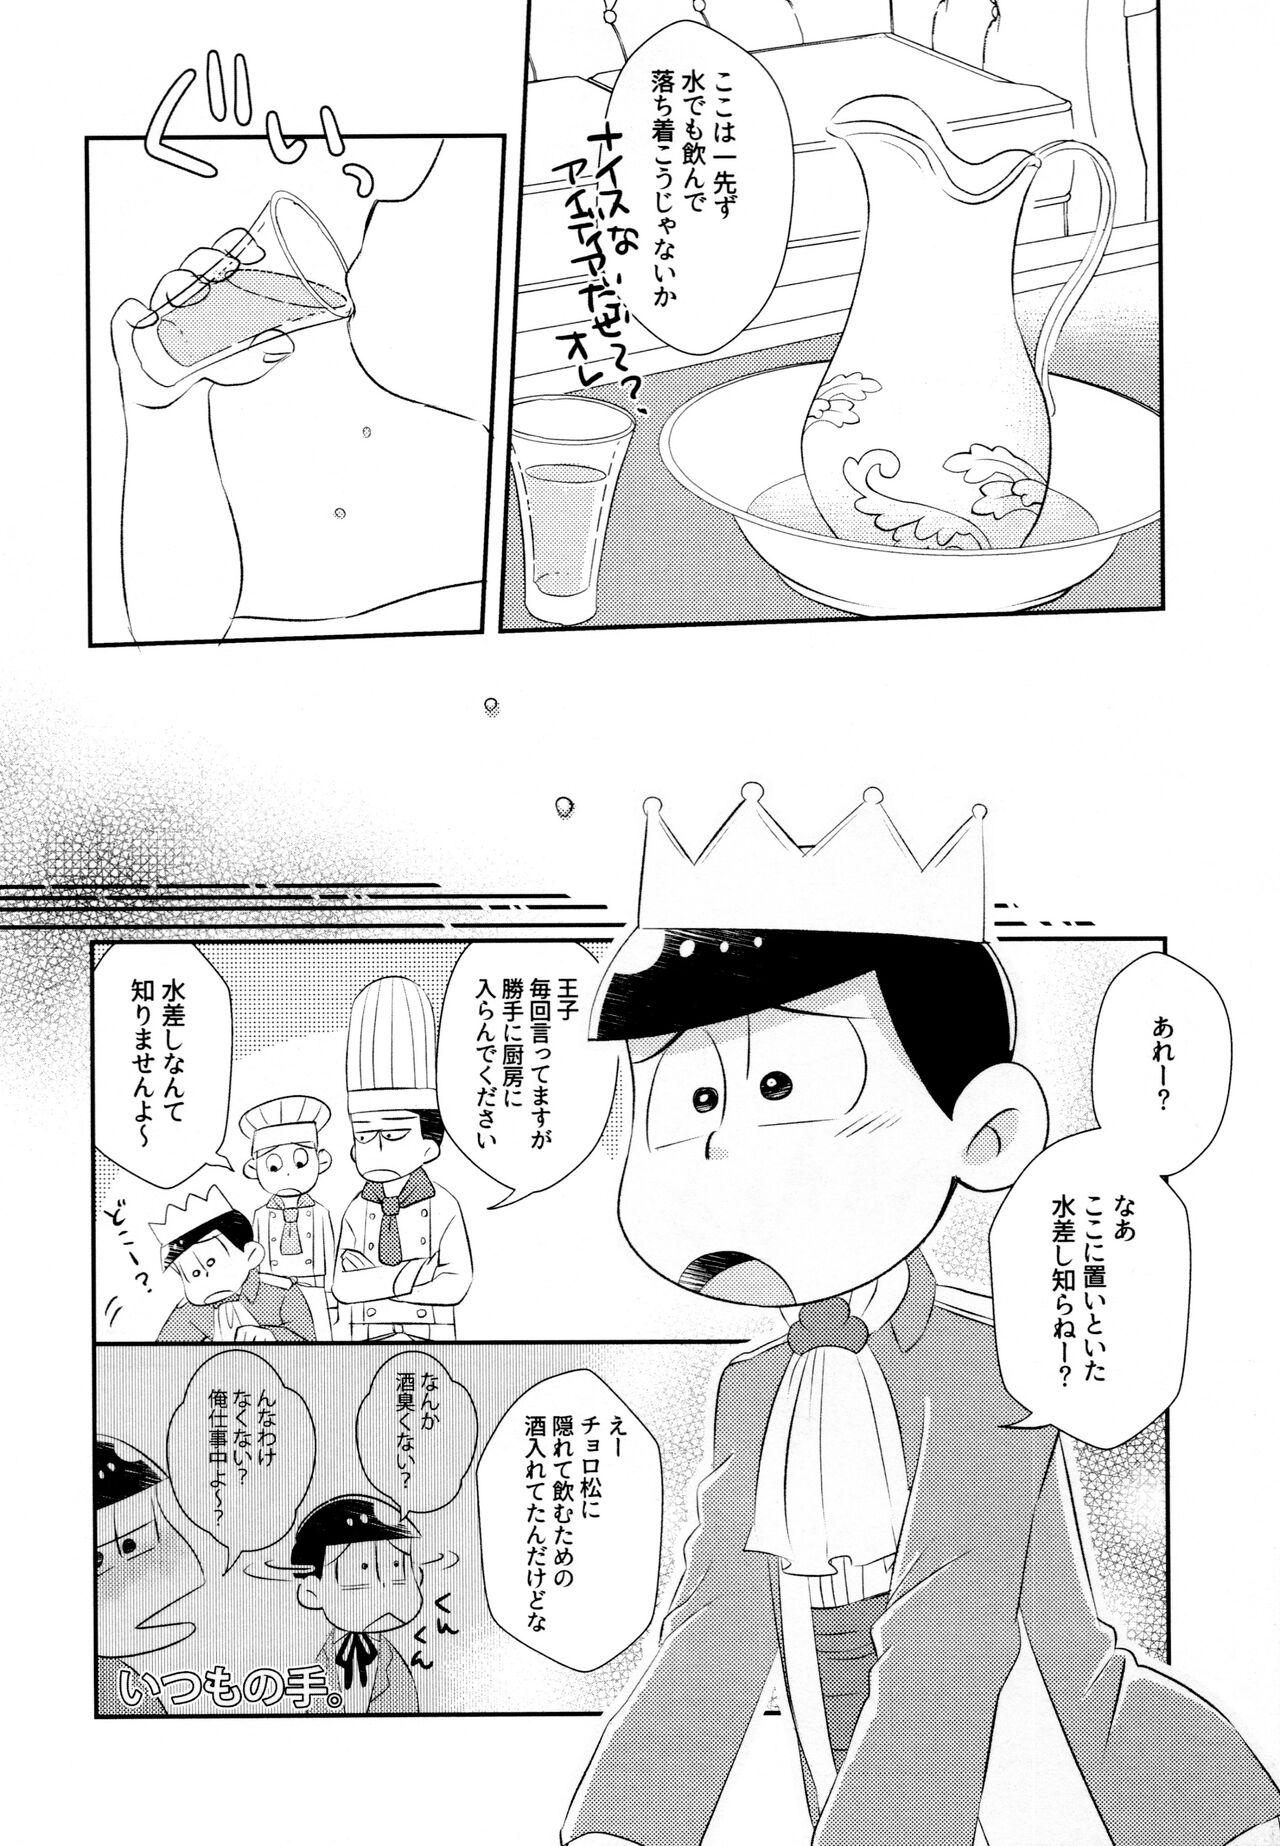 Nut Horo yoi Night - Osomatsu san Fishnet - Page 9